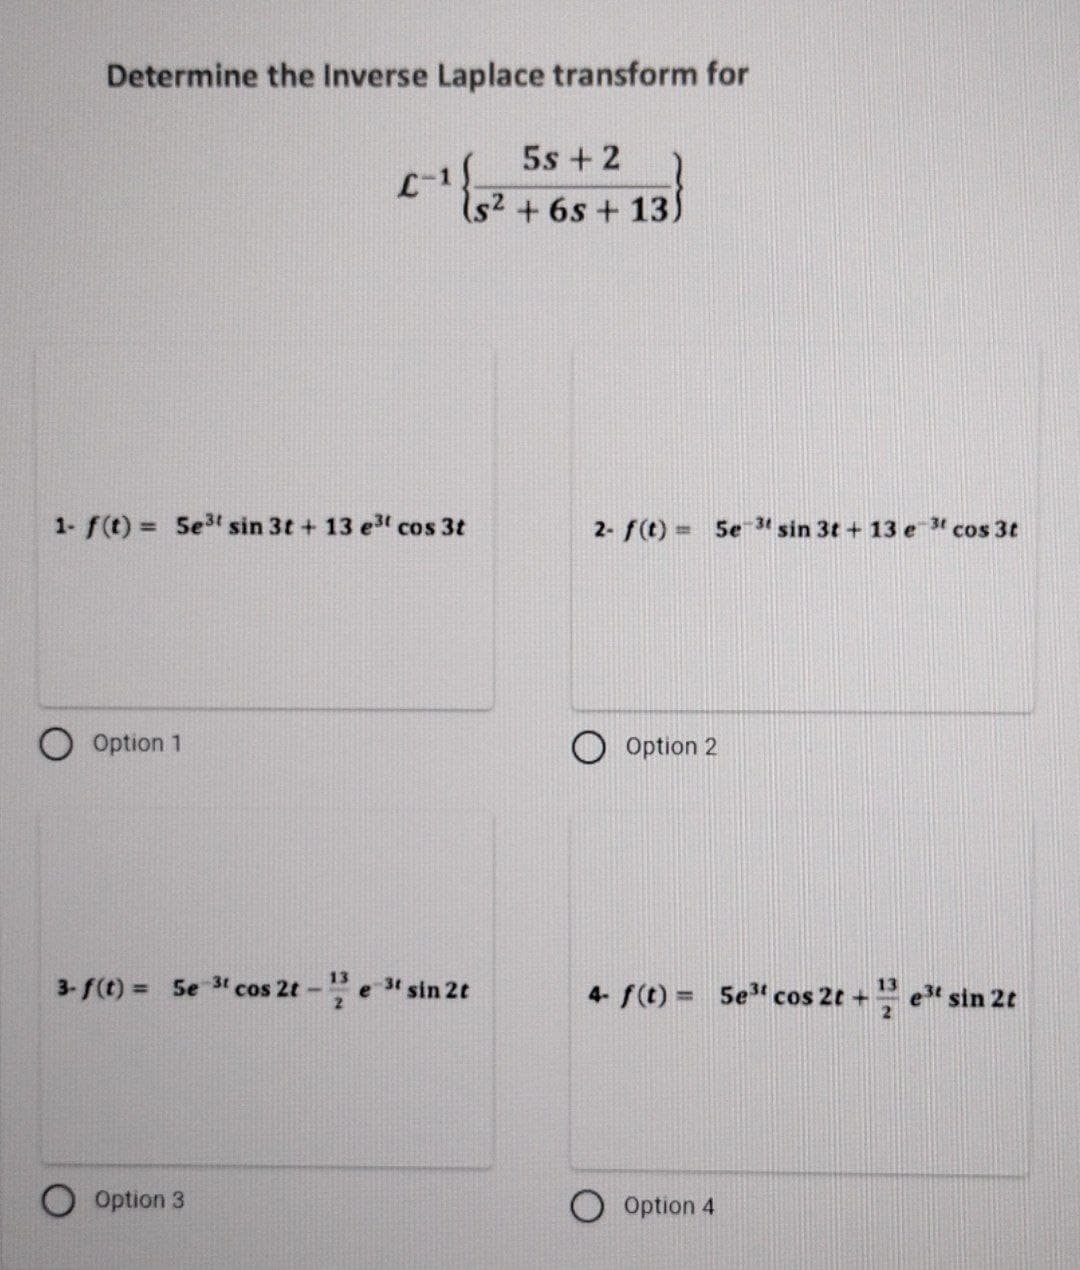 Determine the Inverse Laplace transform for
1- f(t) = 5e³t sin 3t + 13 e³t cos 3t
O Option 1
5s + 2
C-1 {5² +65 +13)
3-f(t) = 5e 3t cos 2t - 123 e 3t sin 2t
Option 3
2- f(t) = 5e-3 sin 3t+13 e 3t cos 3t
Option 2
4- f(t) = 5e³ cos 2t+e³ sin 2t
Option 4